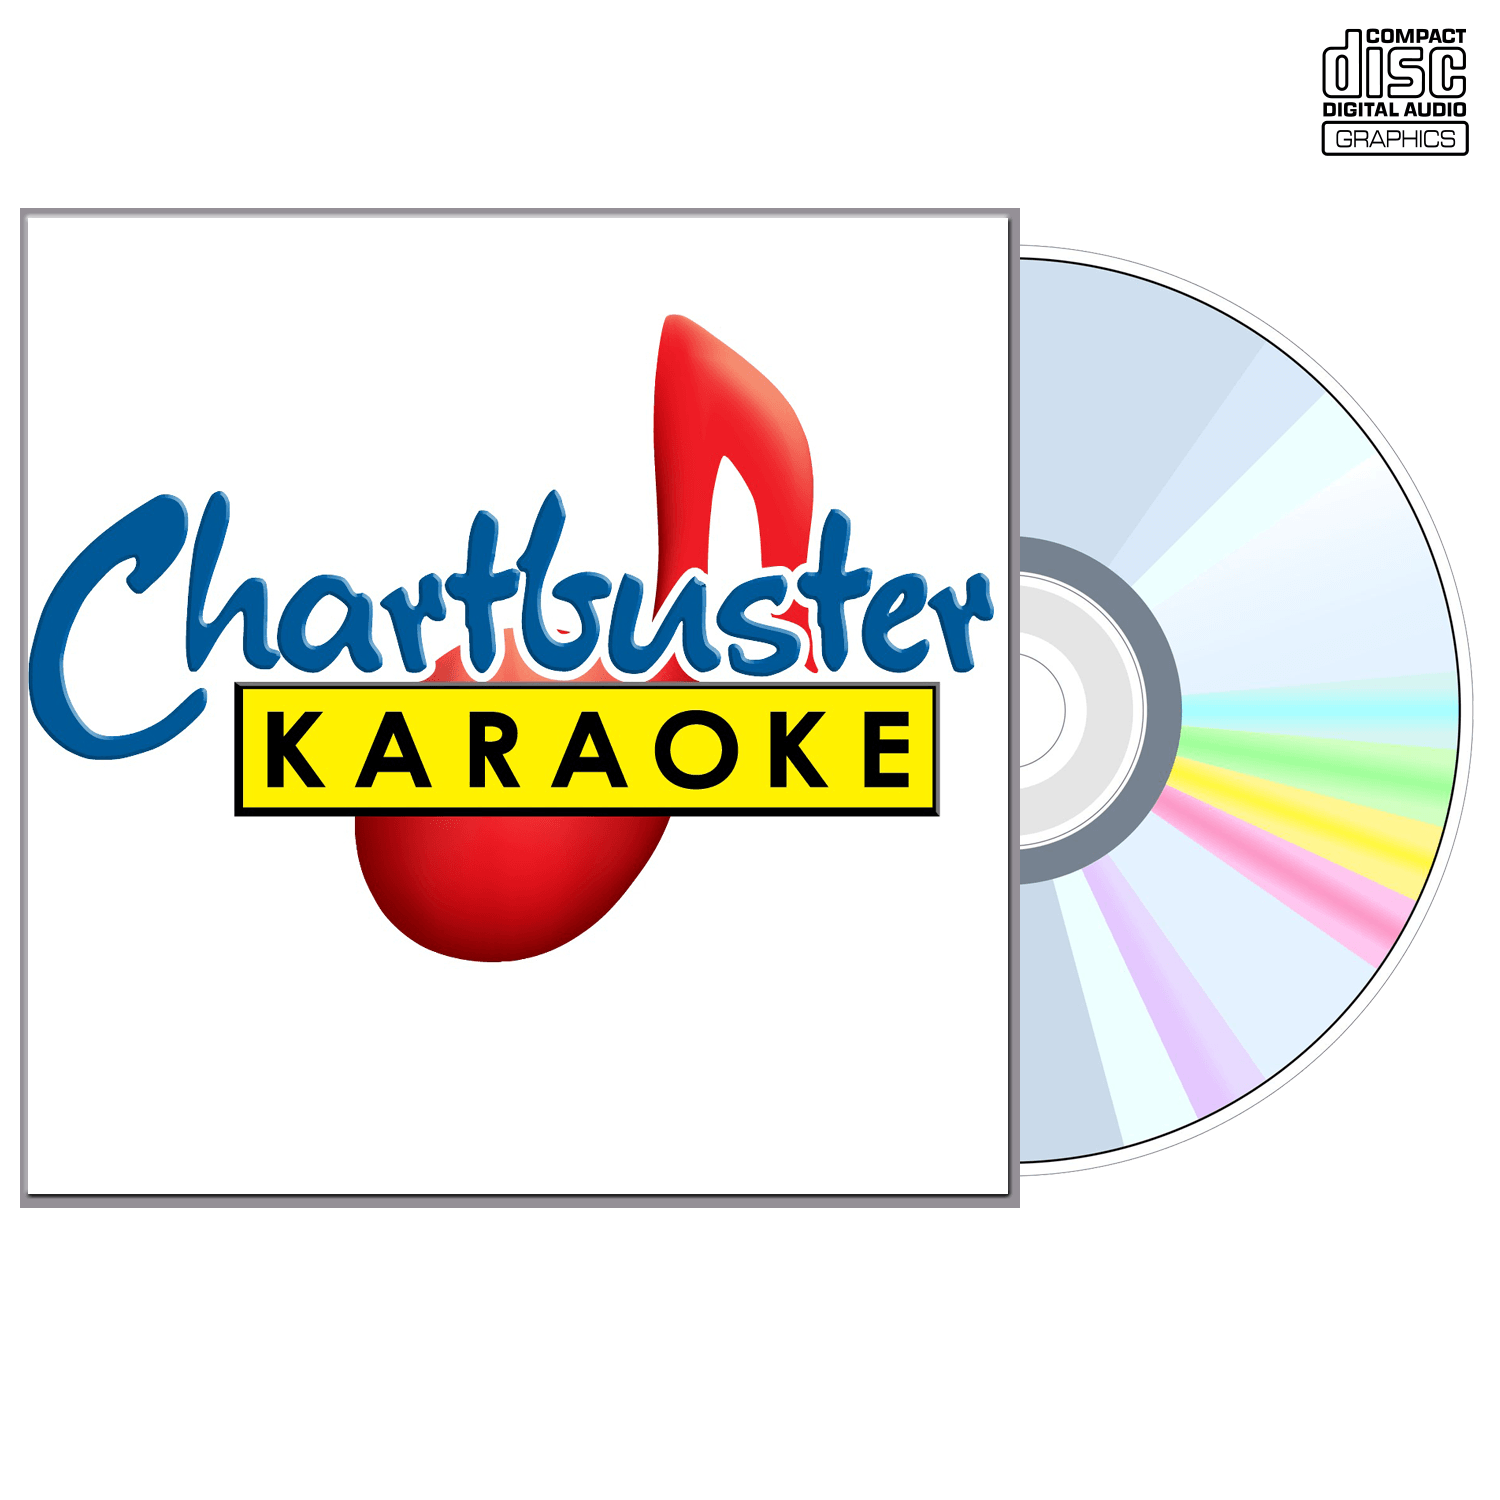 The Police - CD+G - Chartbuster Karaoke - Karaoke Home Entertainment